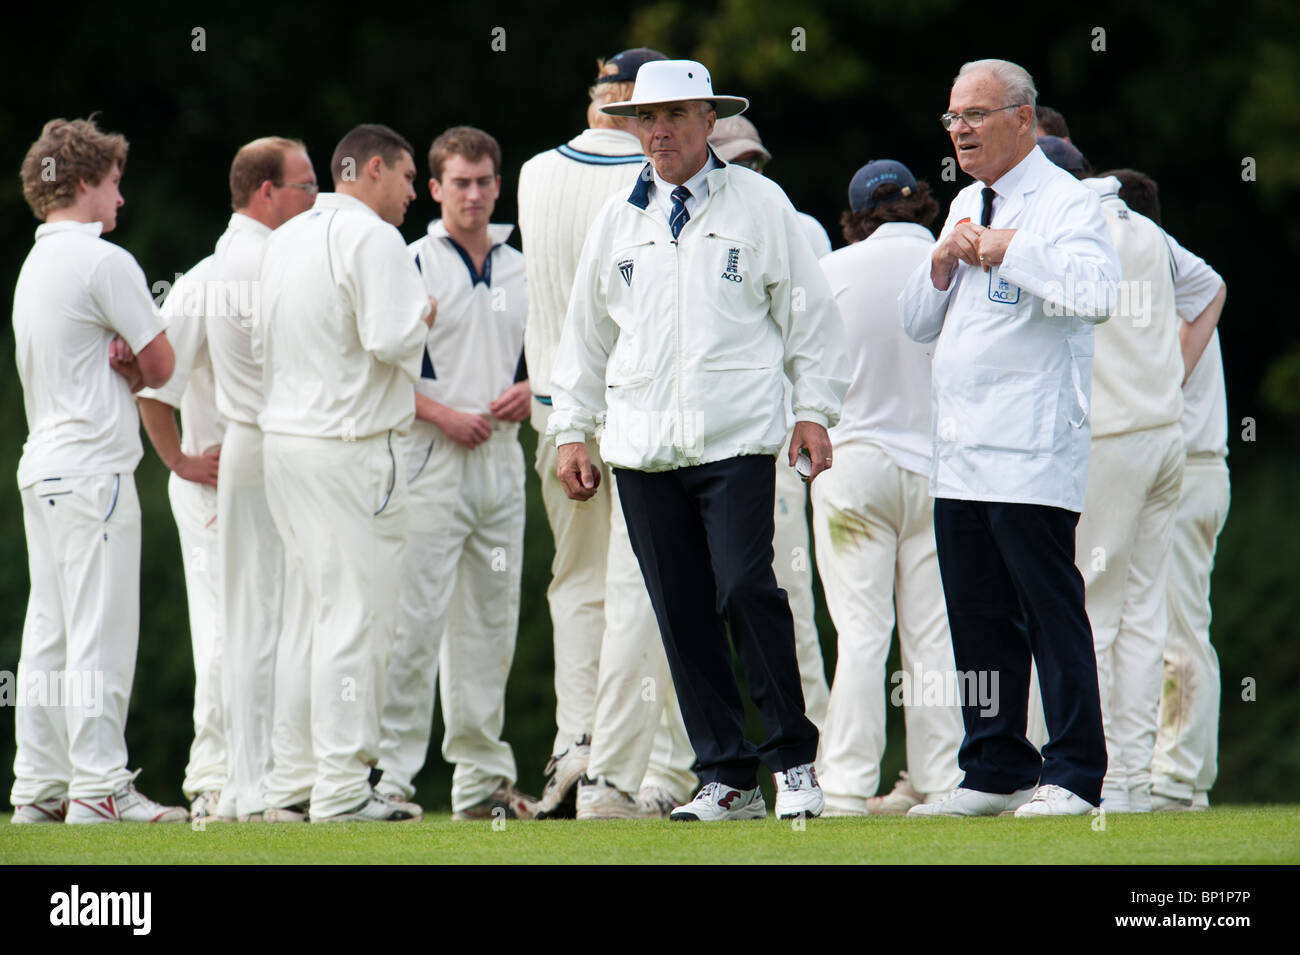 Cricket match, Dorset, England,UK. Umpires and players. Stock Photo